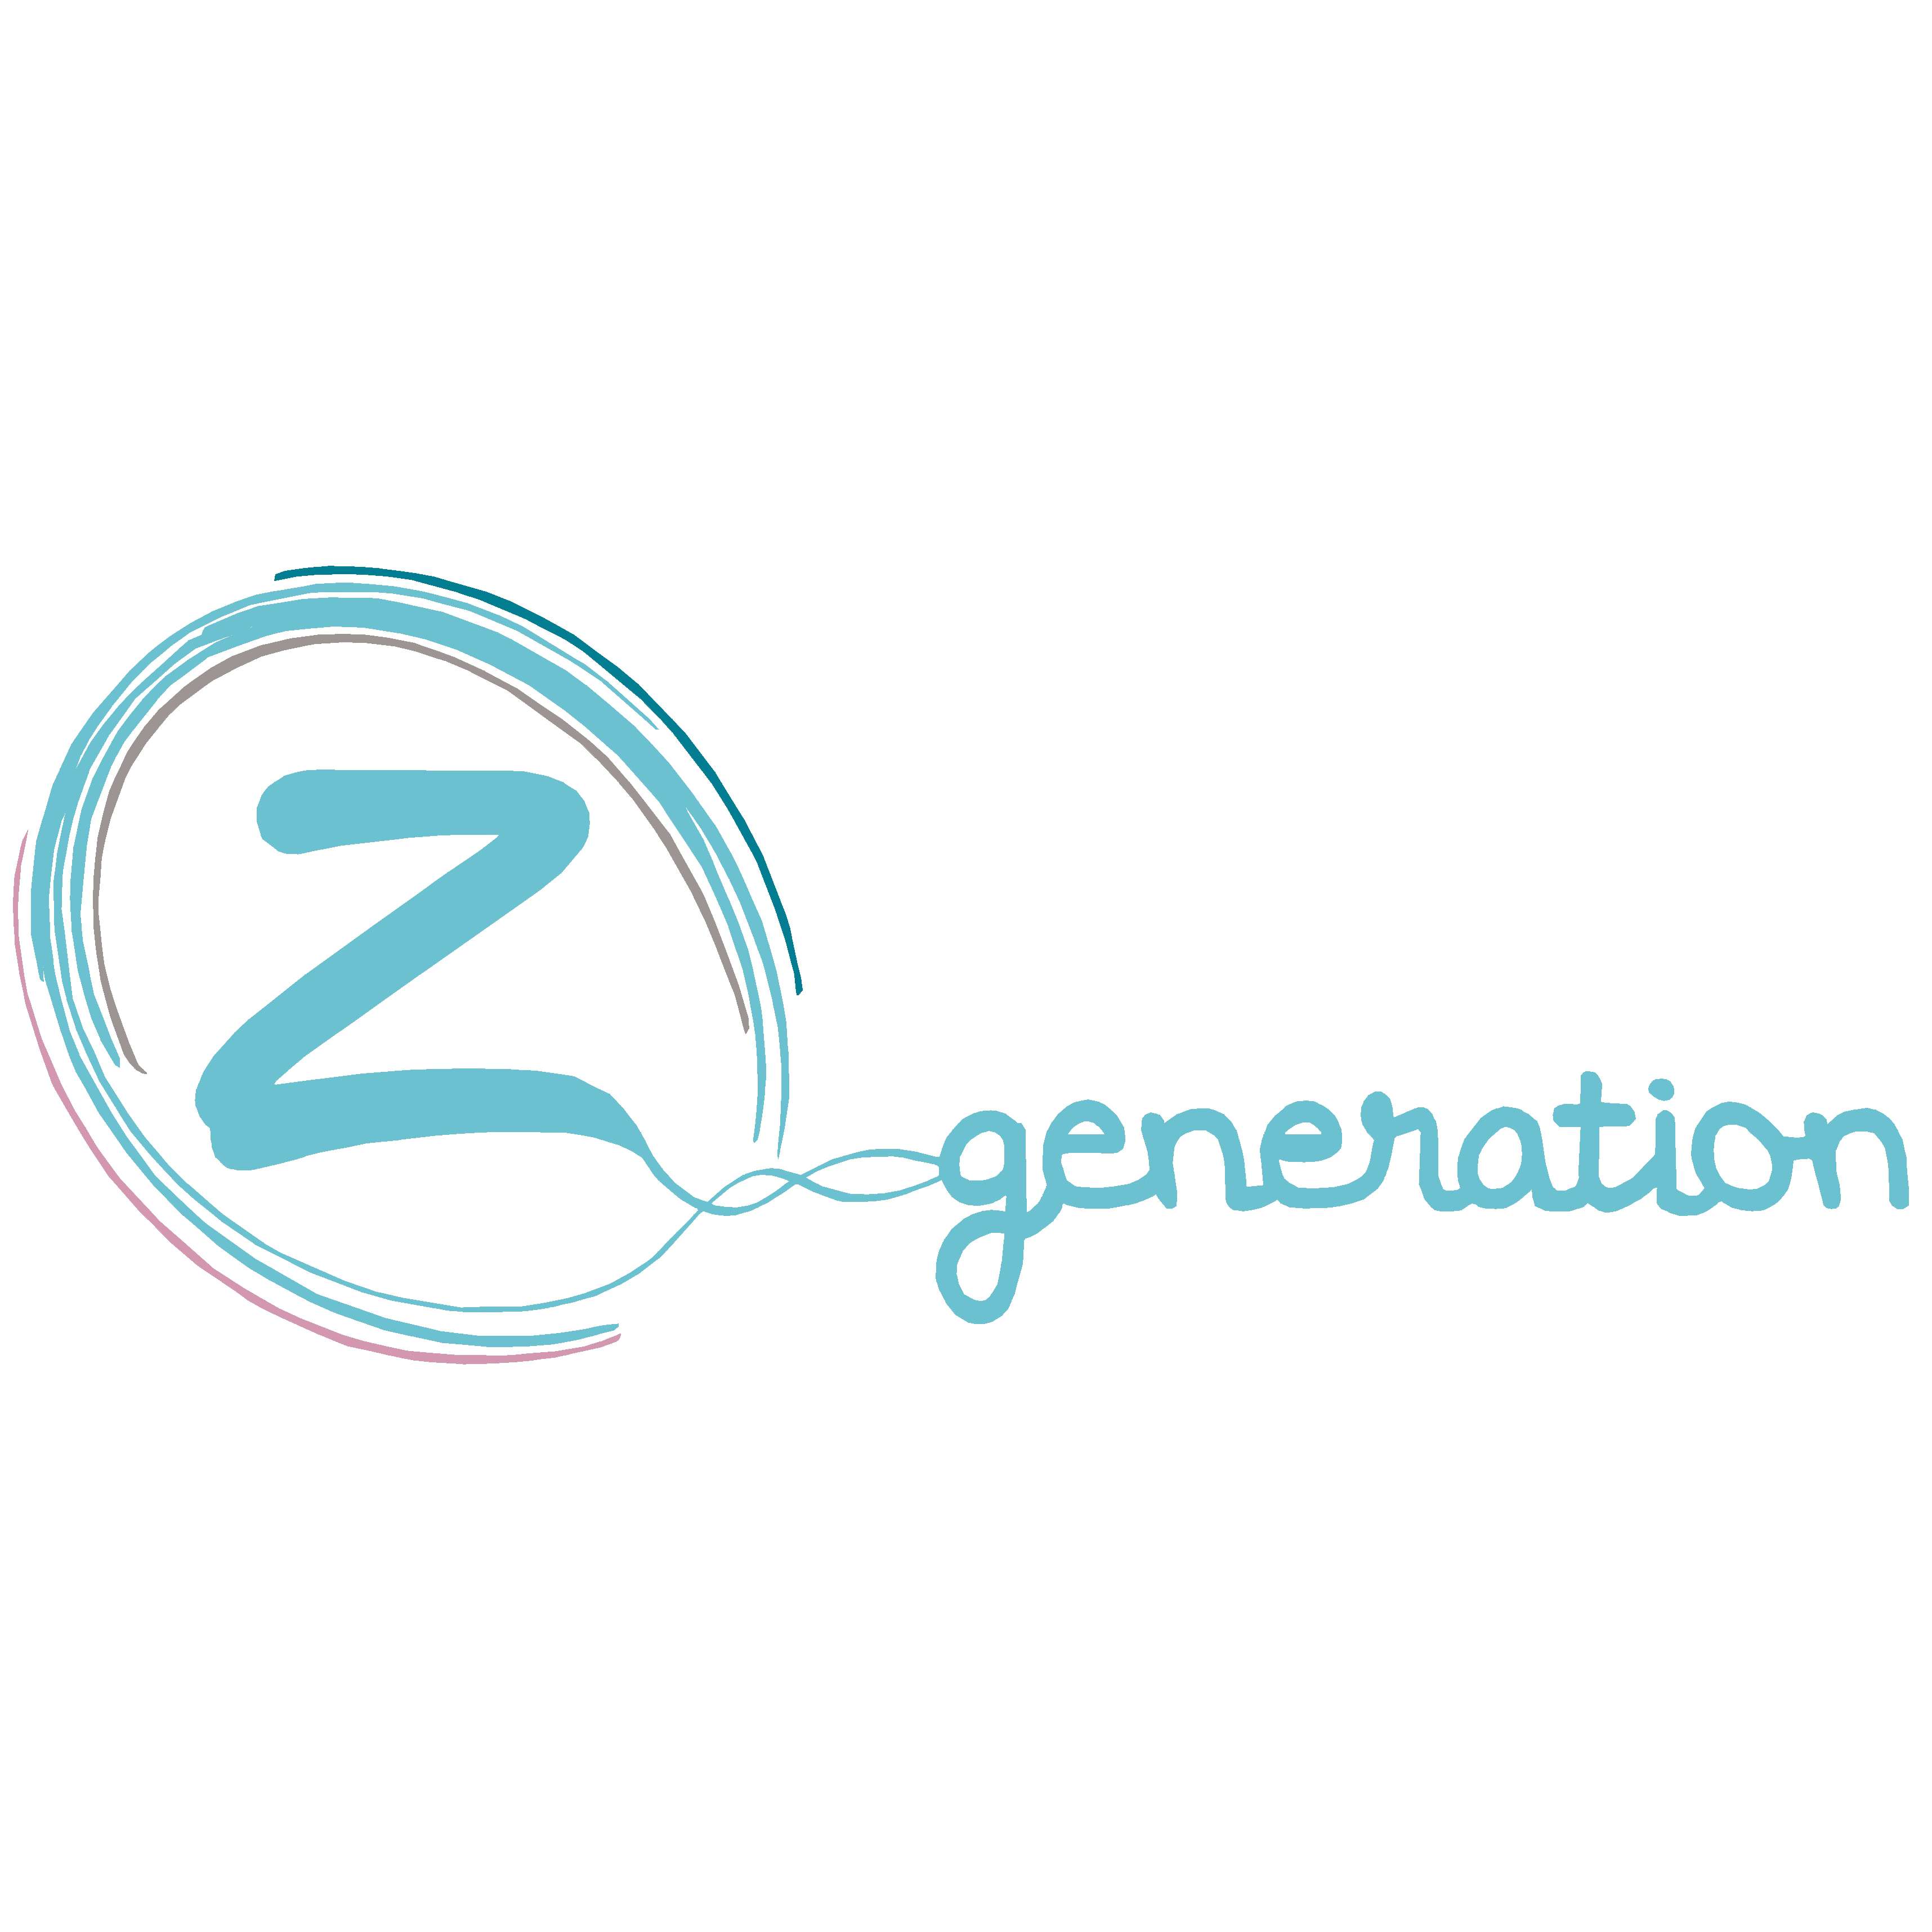 Z generation